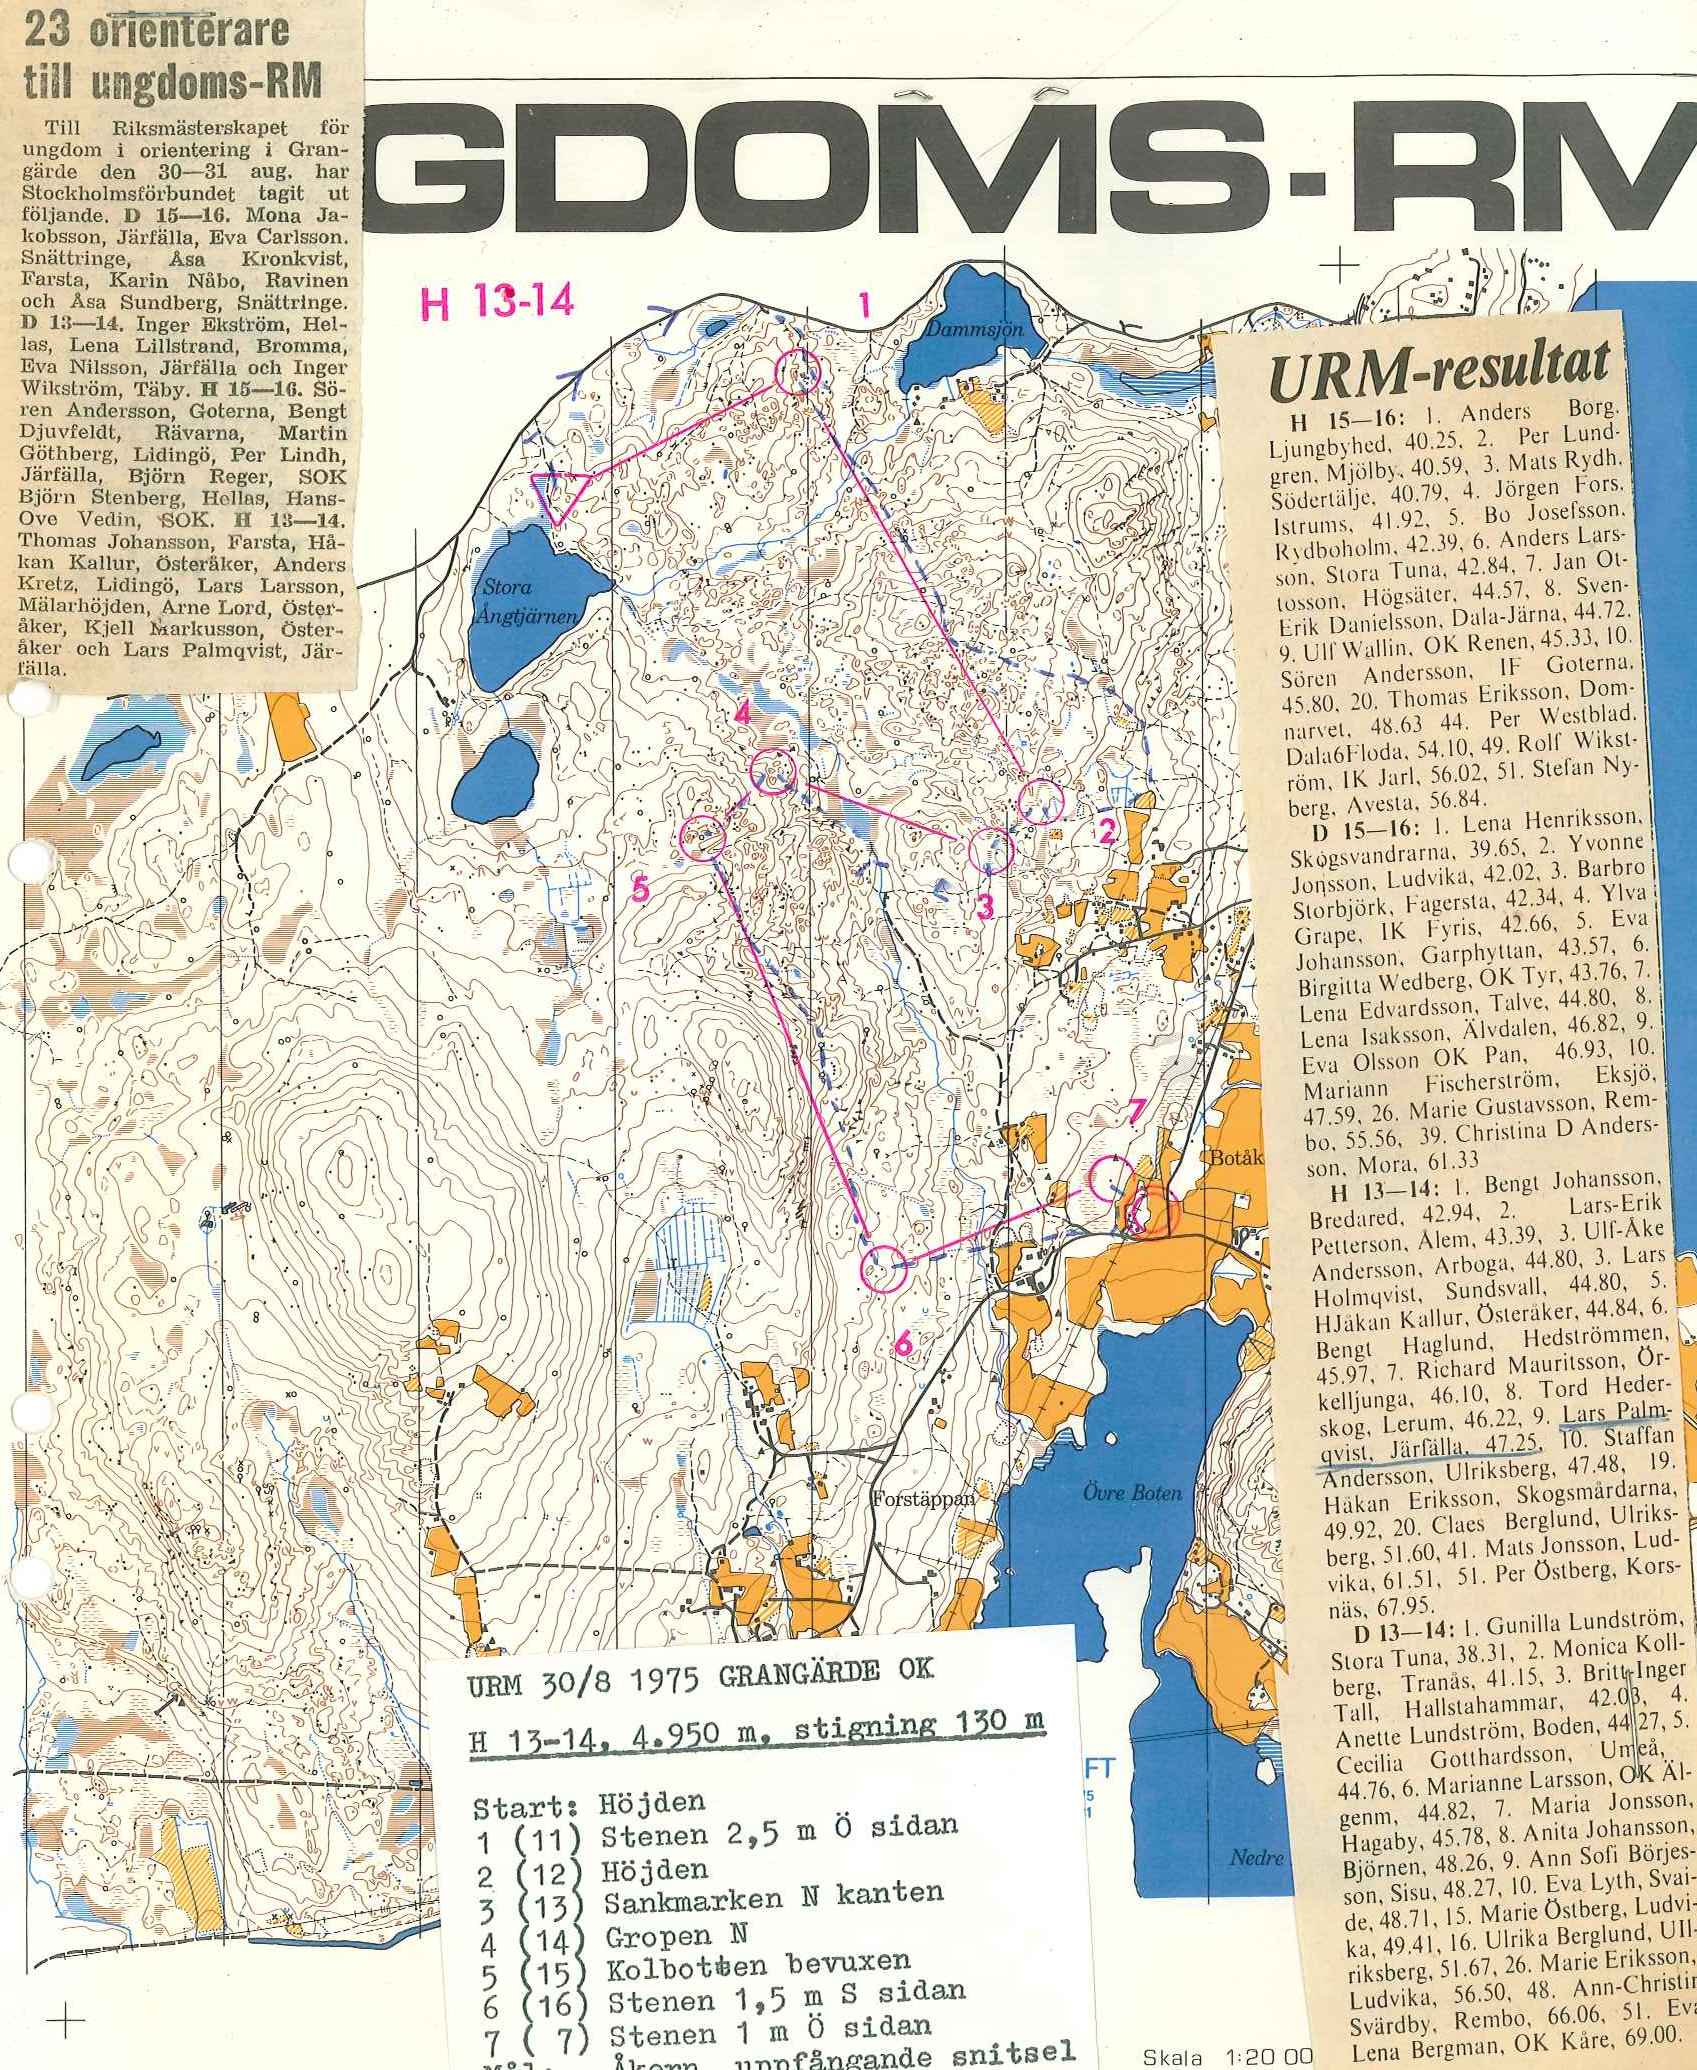 USM (30.08.1975)